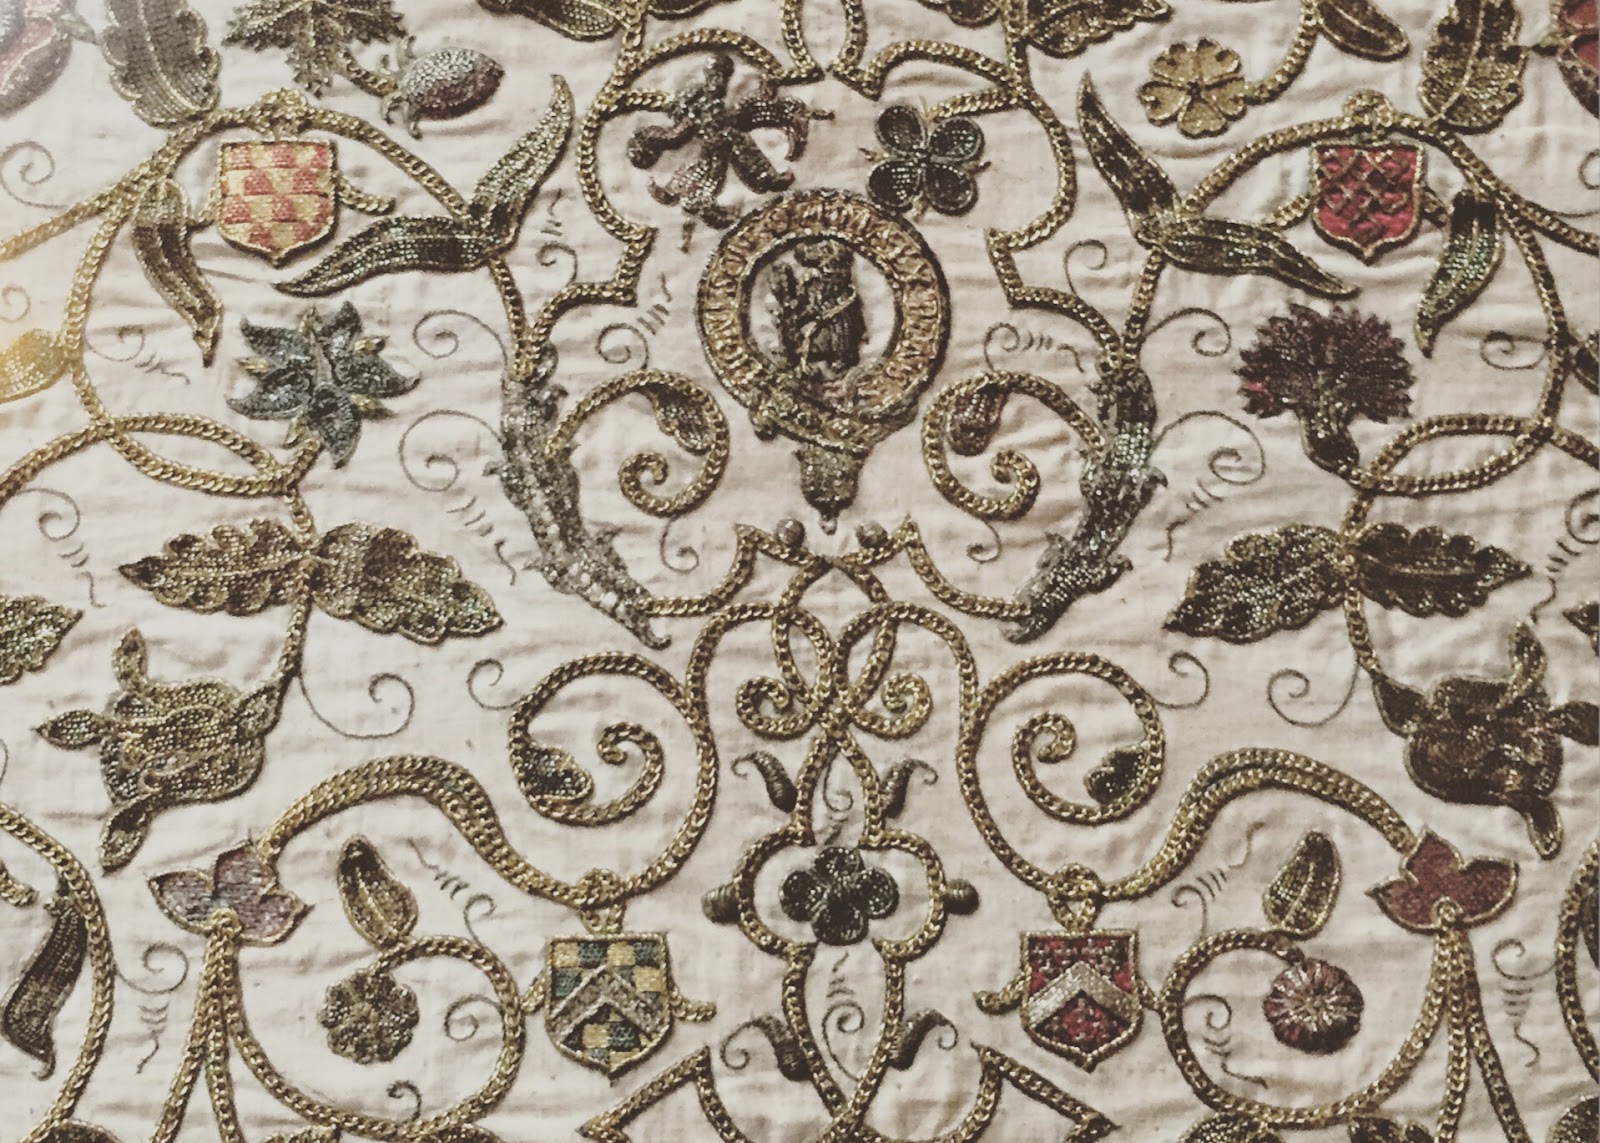 Vintage embroidered pattern